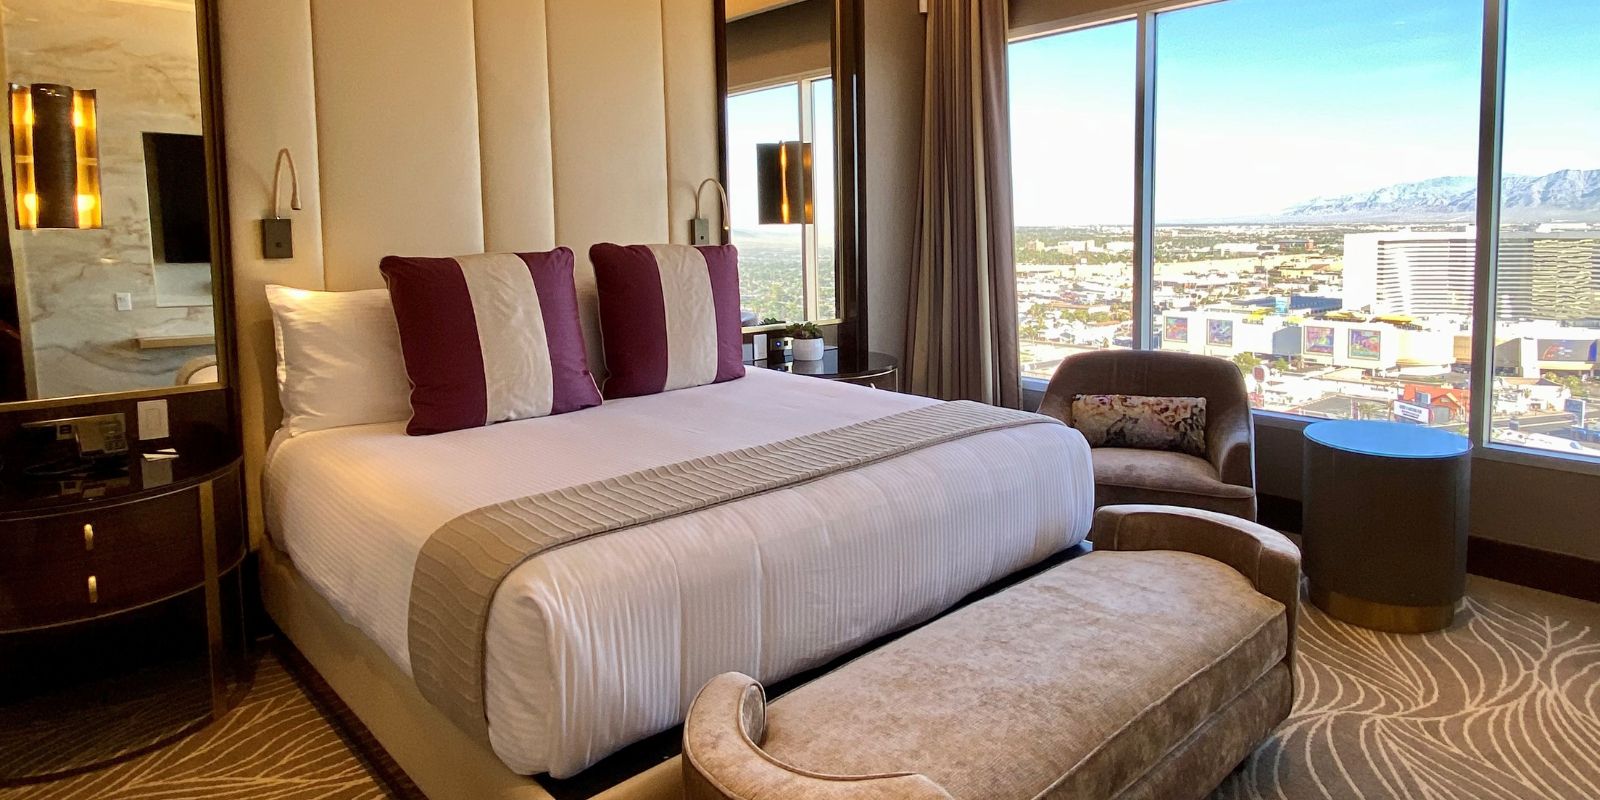 SAHARA Las Vegas - Rooms